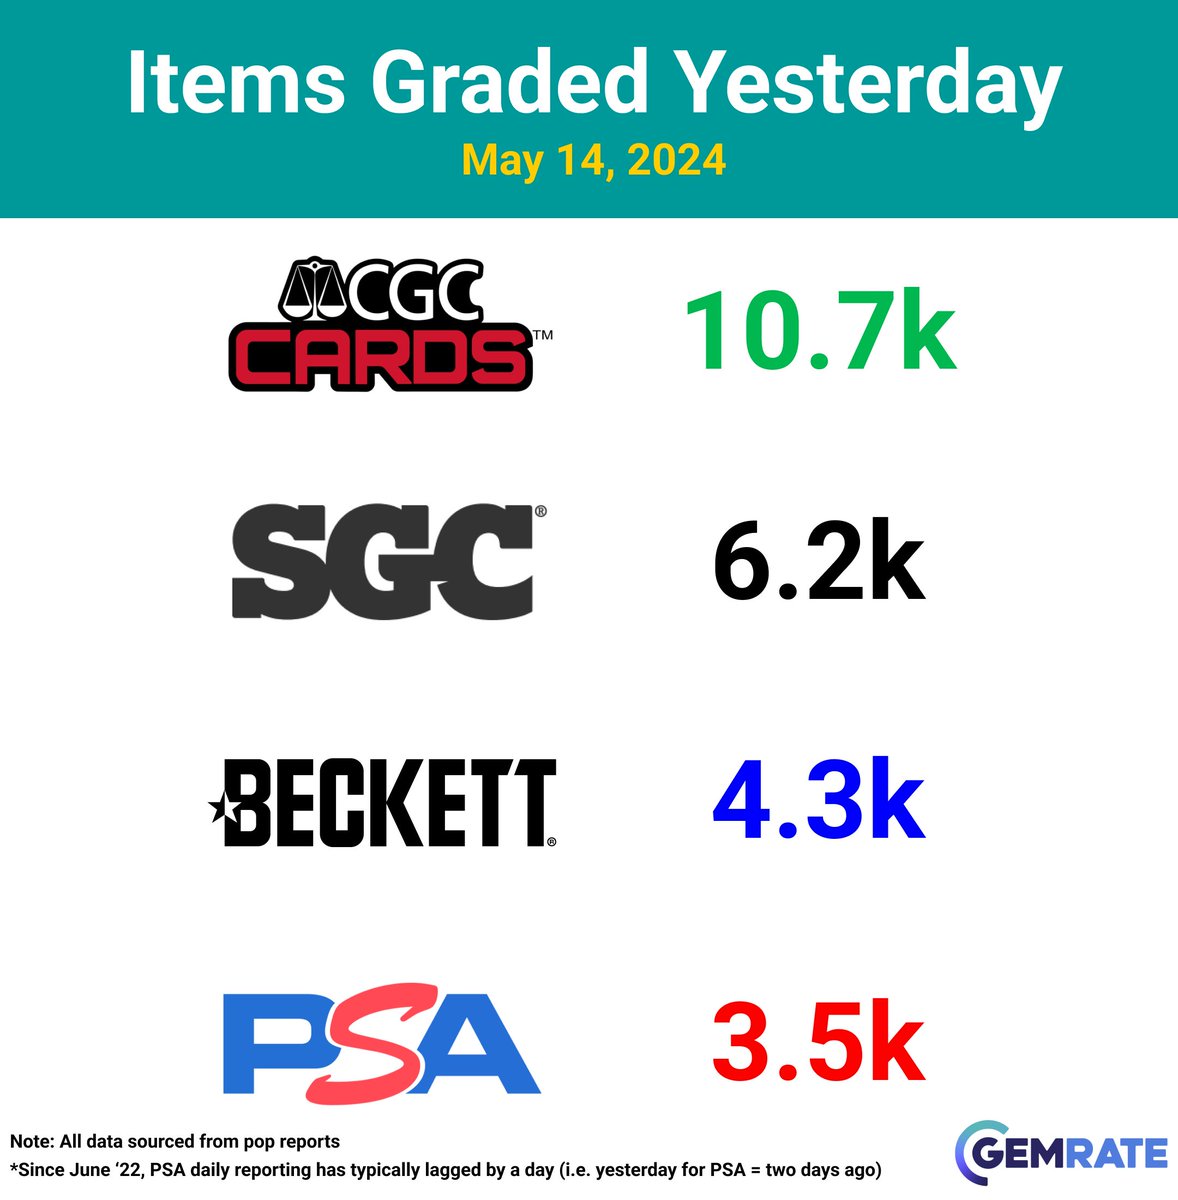 Daily Grading Update -> May 14, 2024

Items graded yesterday:
CGC -> 10.7k
SGC -> 6.2k
Beckett -> 4.3k
PSA -> 3.5k

#sportscards #tradingcards #pokemoncards